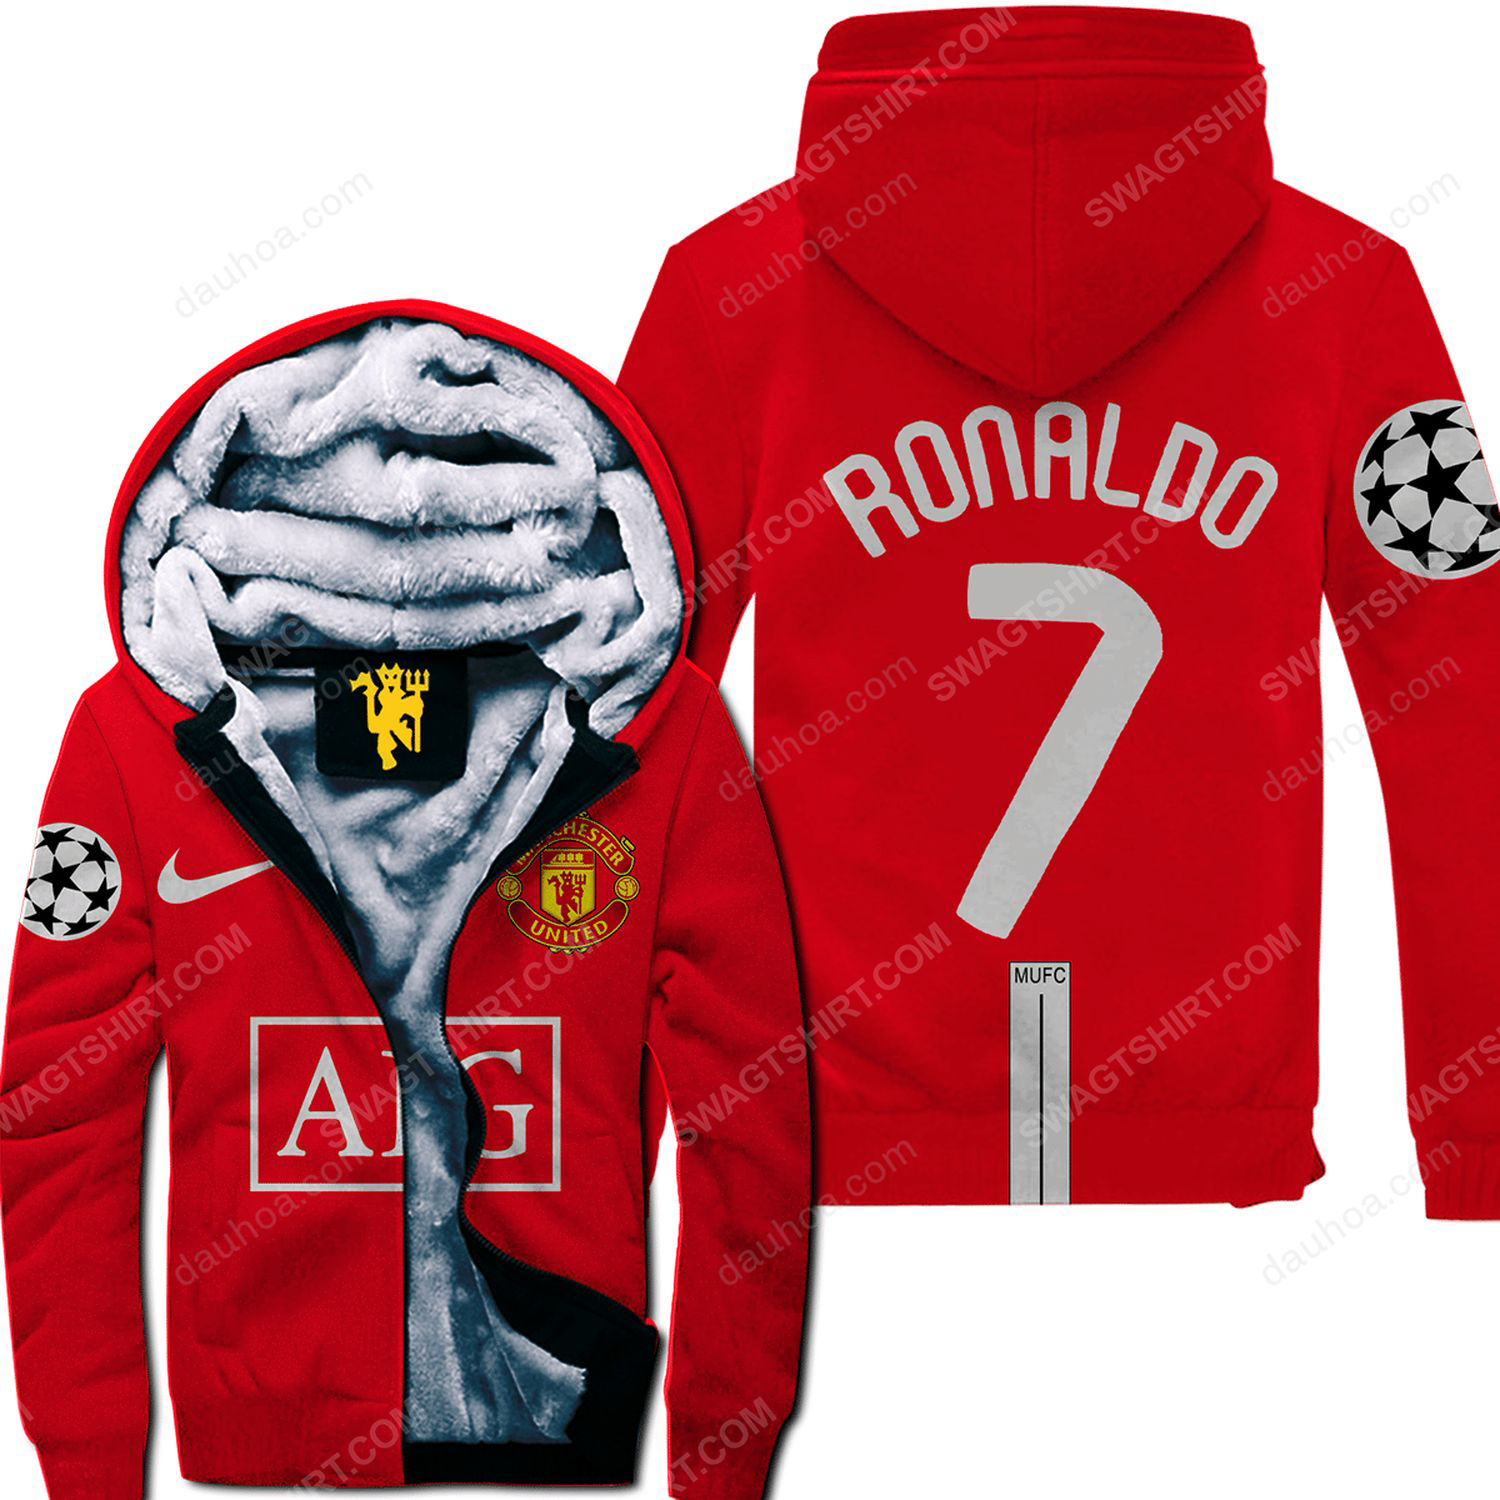 Manchester united with ronaldo 7 full print shirt